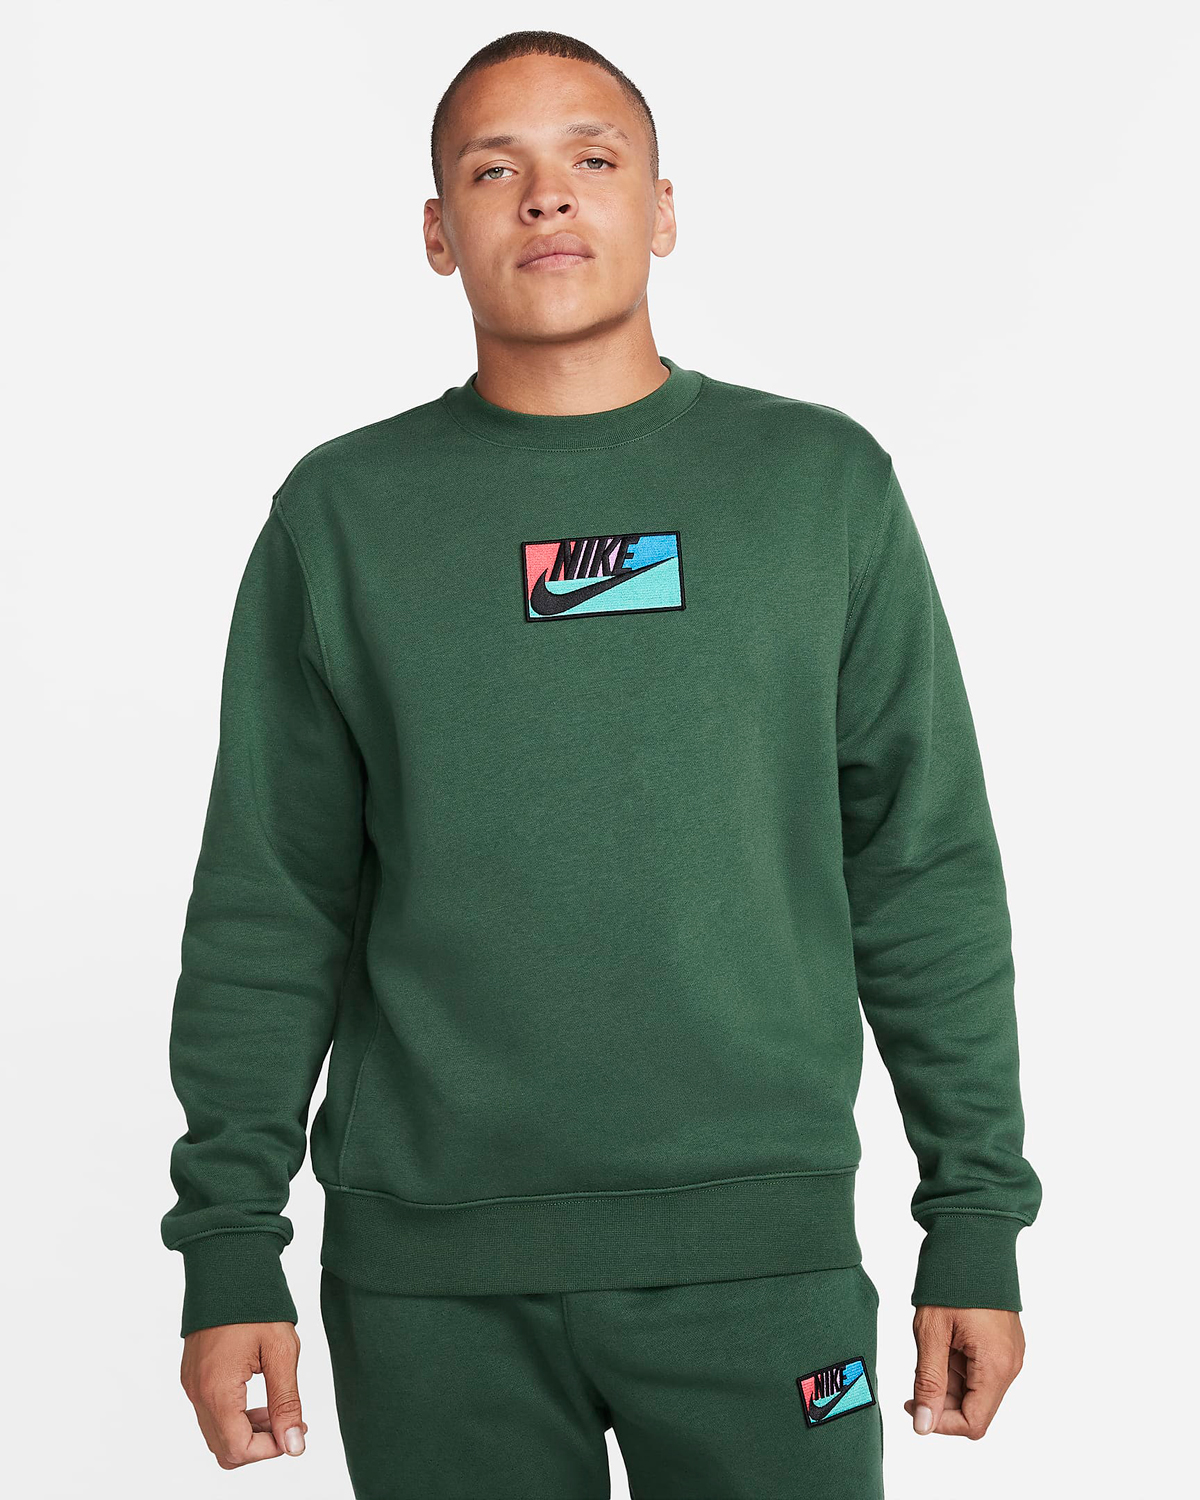 Nike-Club-Fleece-Patch-Crew-Sweatshirt-Fir-Green